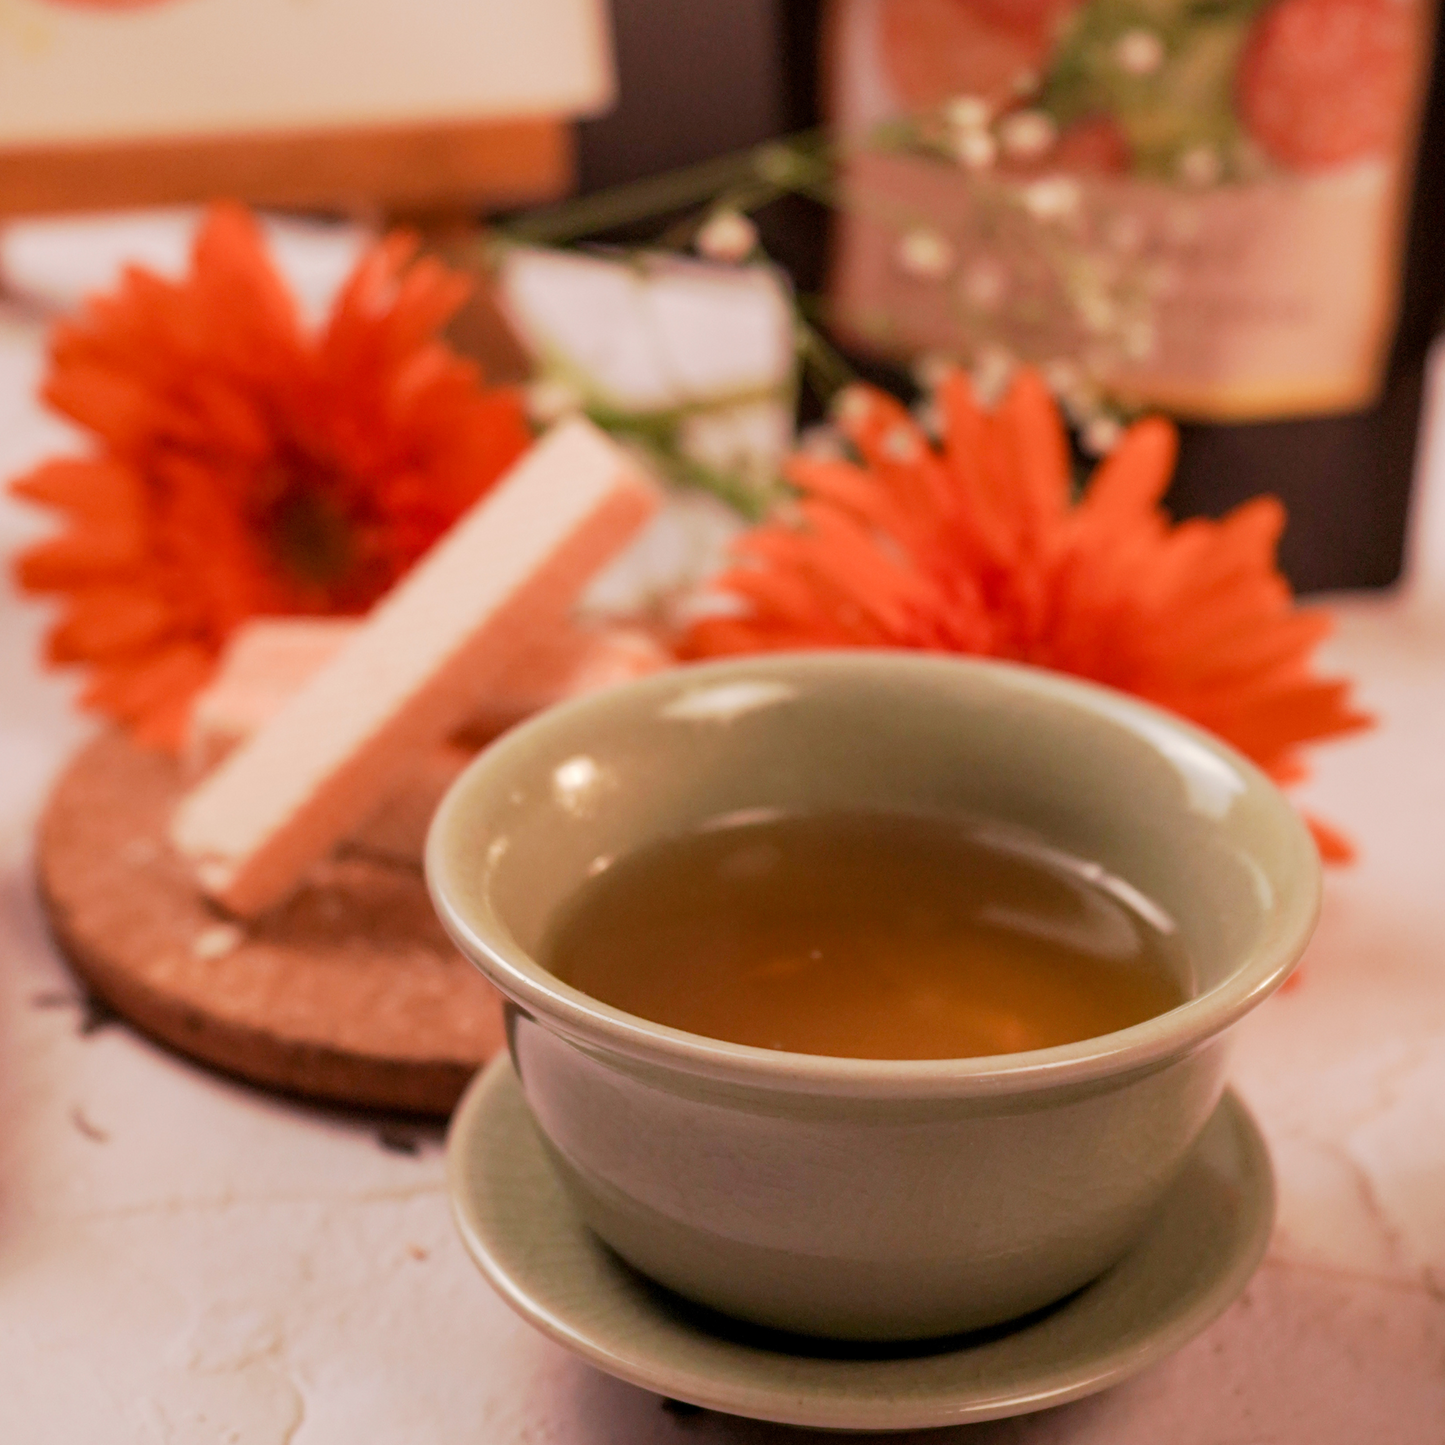 Buy Fruit Teas, Orange Tea, Apple & Mango Tea, Online - Chai Experience